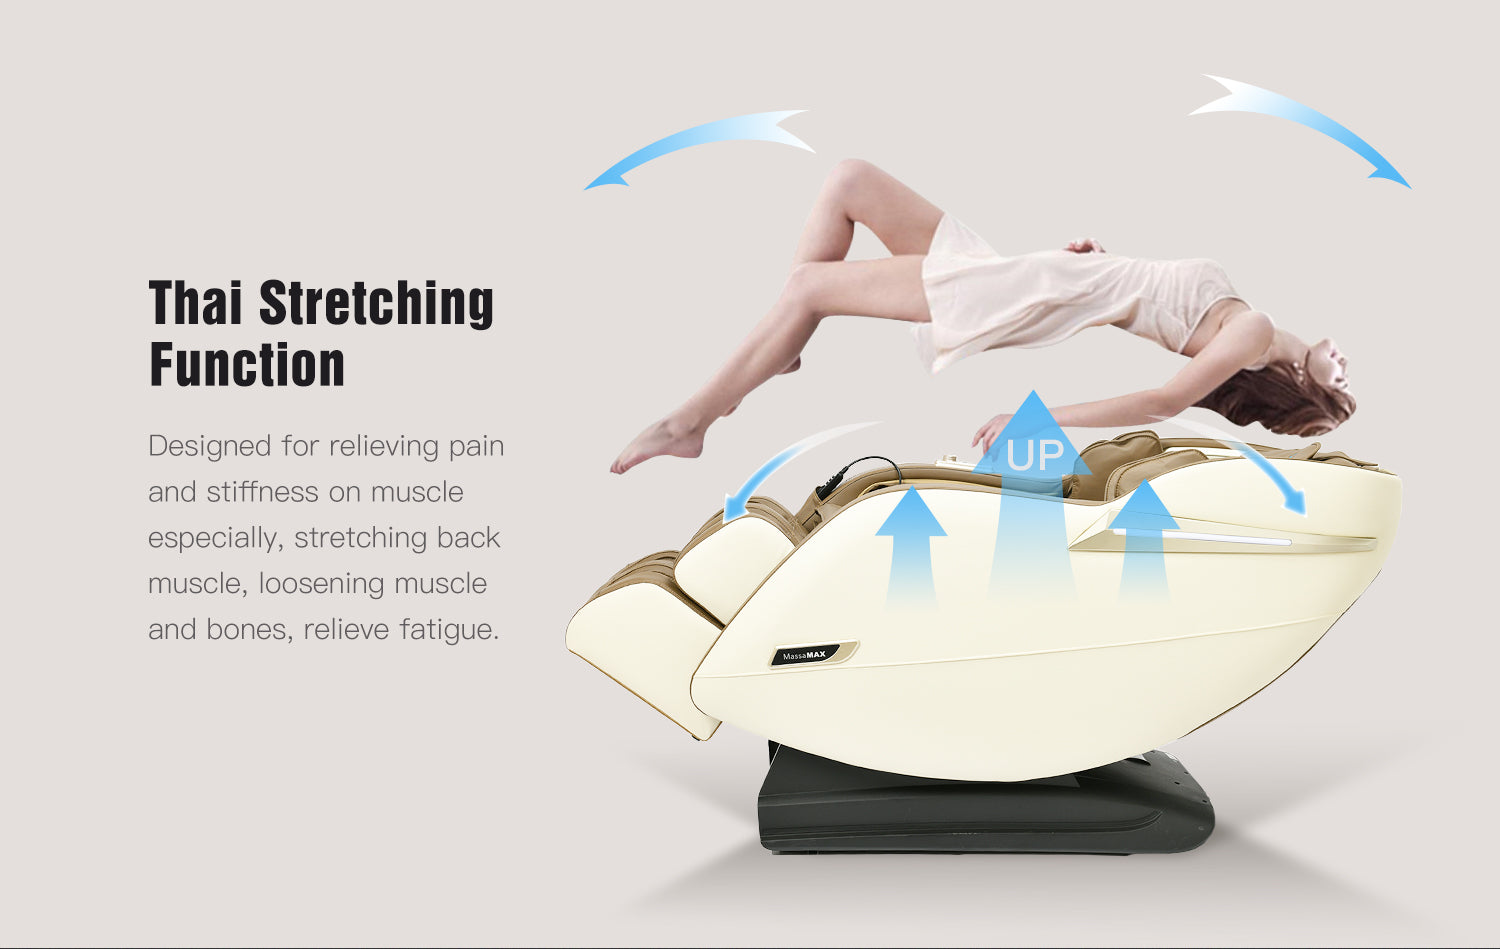 Thai Stretching Function